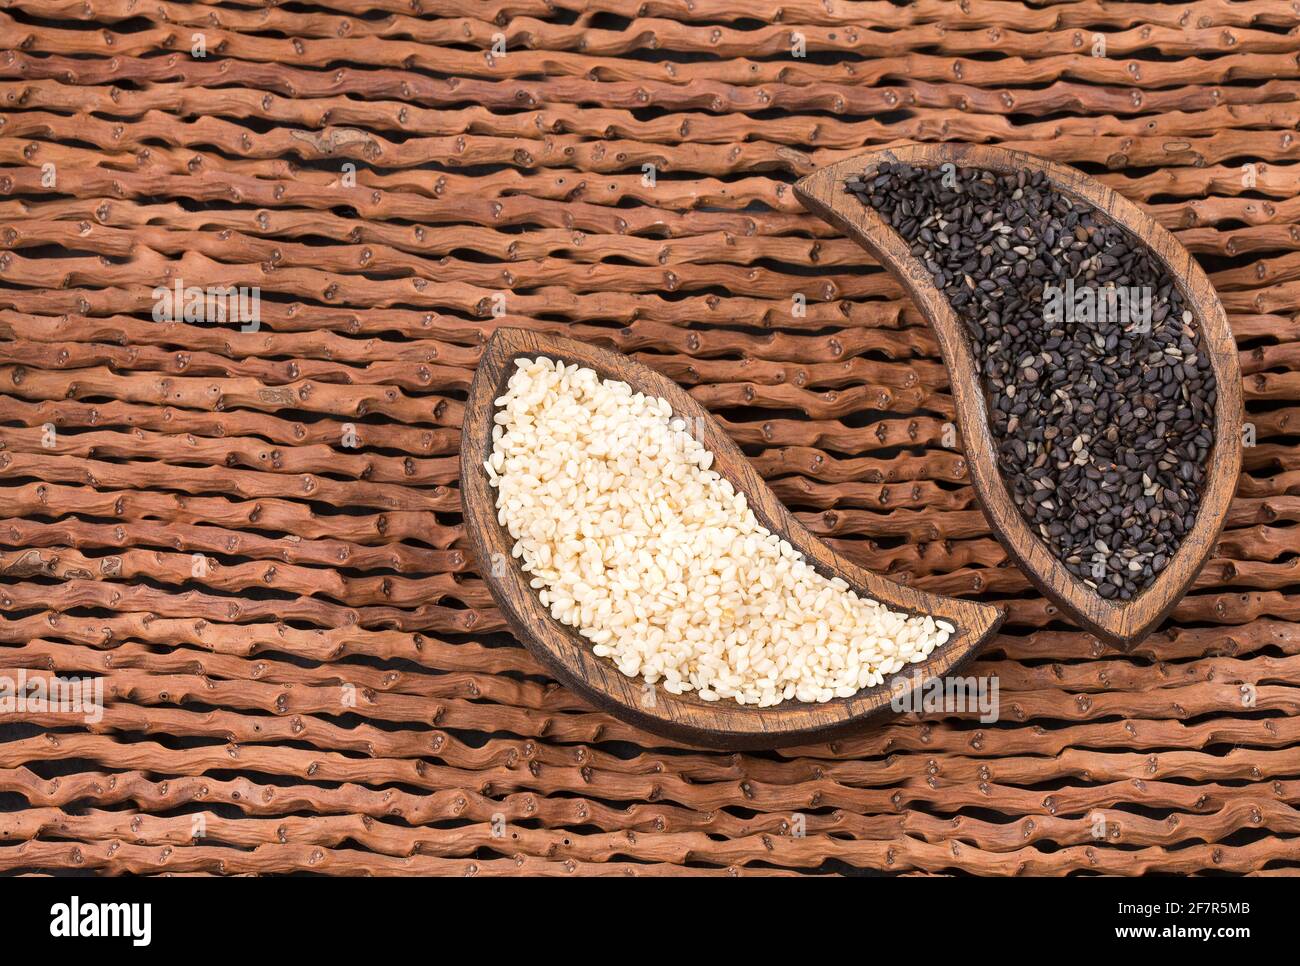 White sesame and black sesame seed - Sesamum indicum. Stock Photo